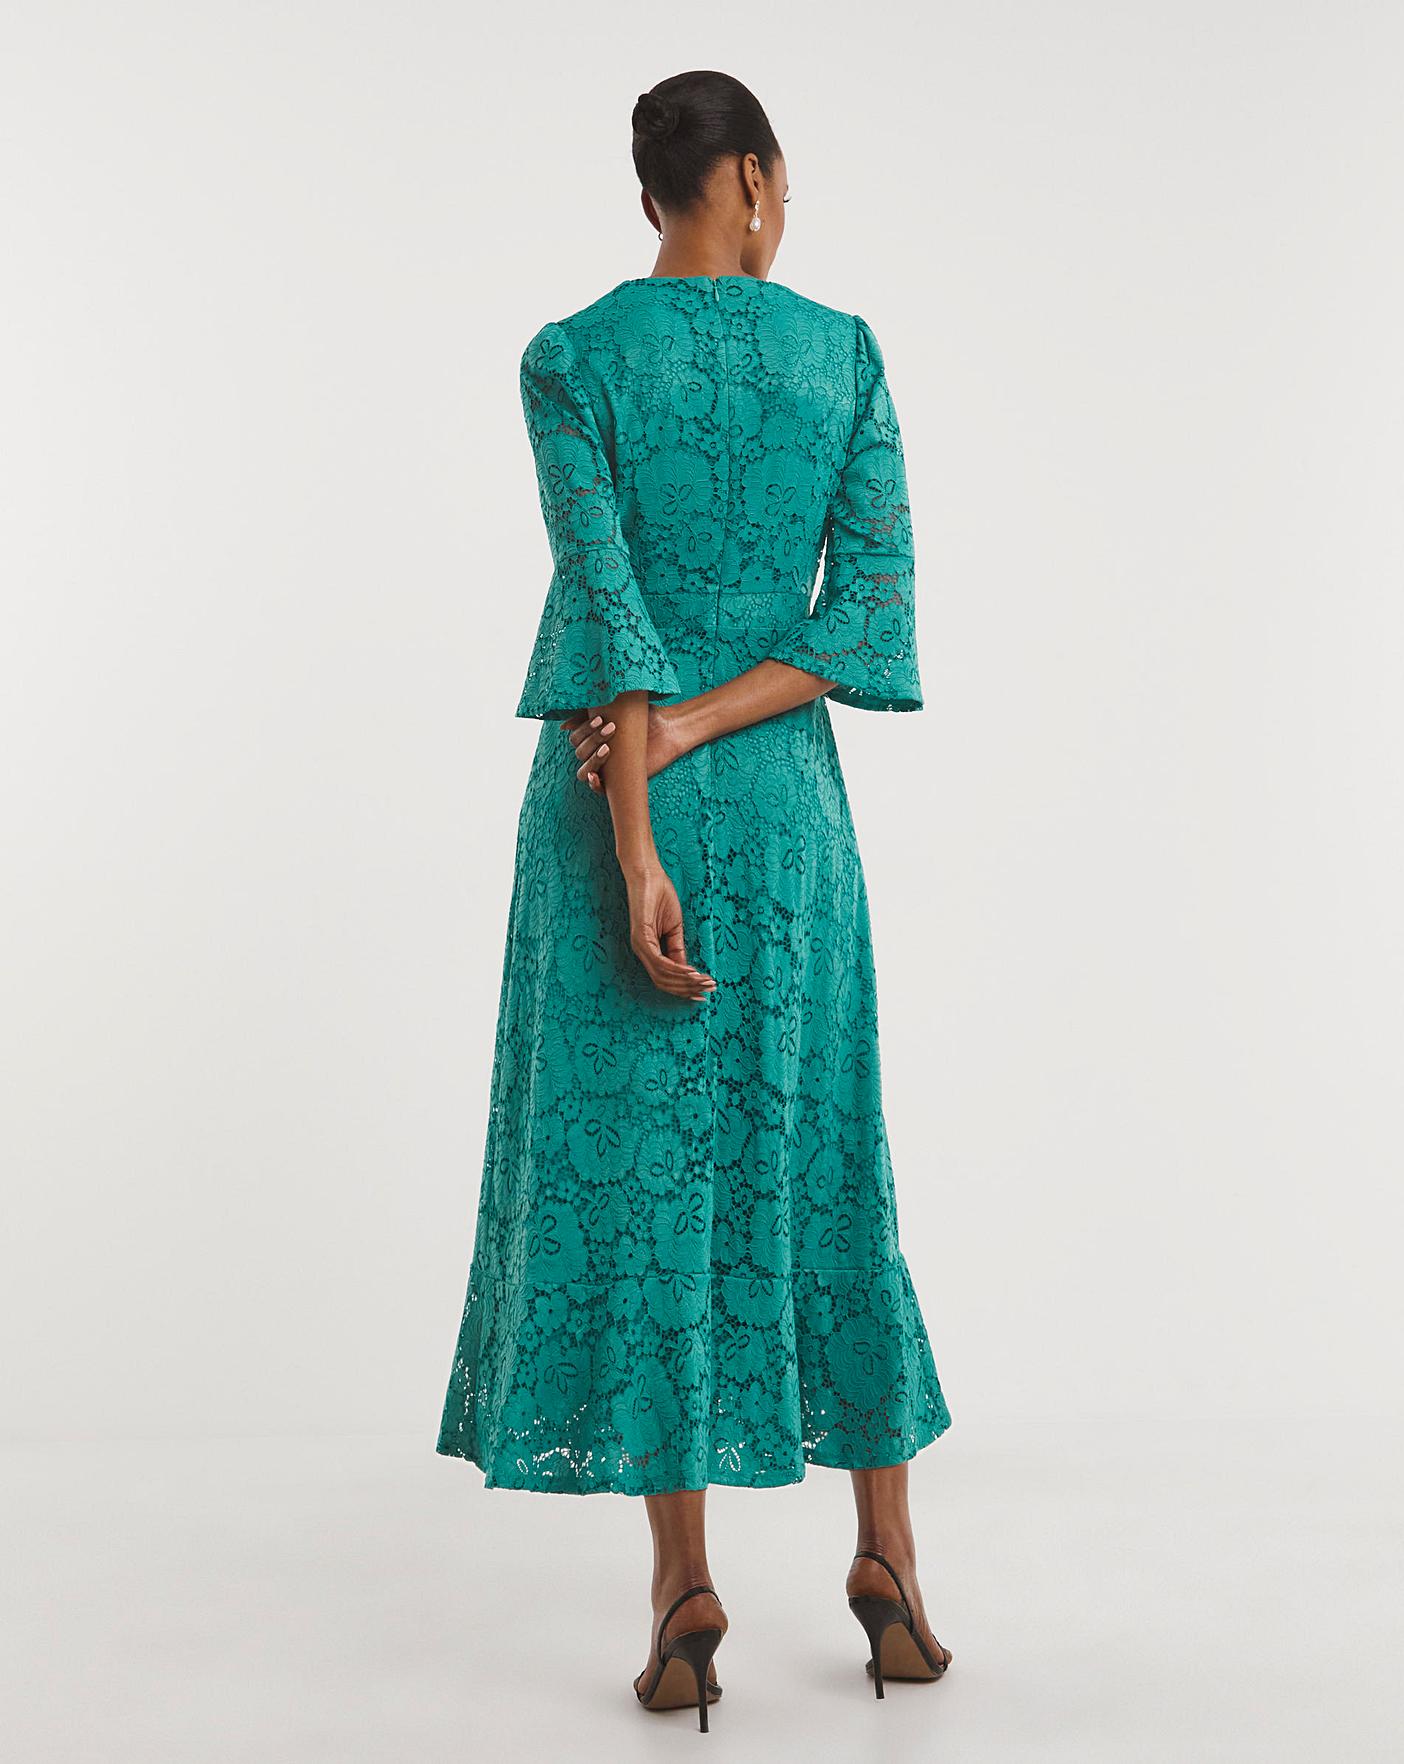 Joanna Hope Green Stretch Lace Dress | J D Williams